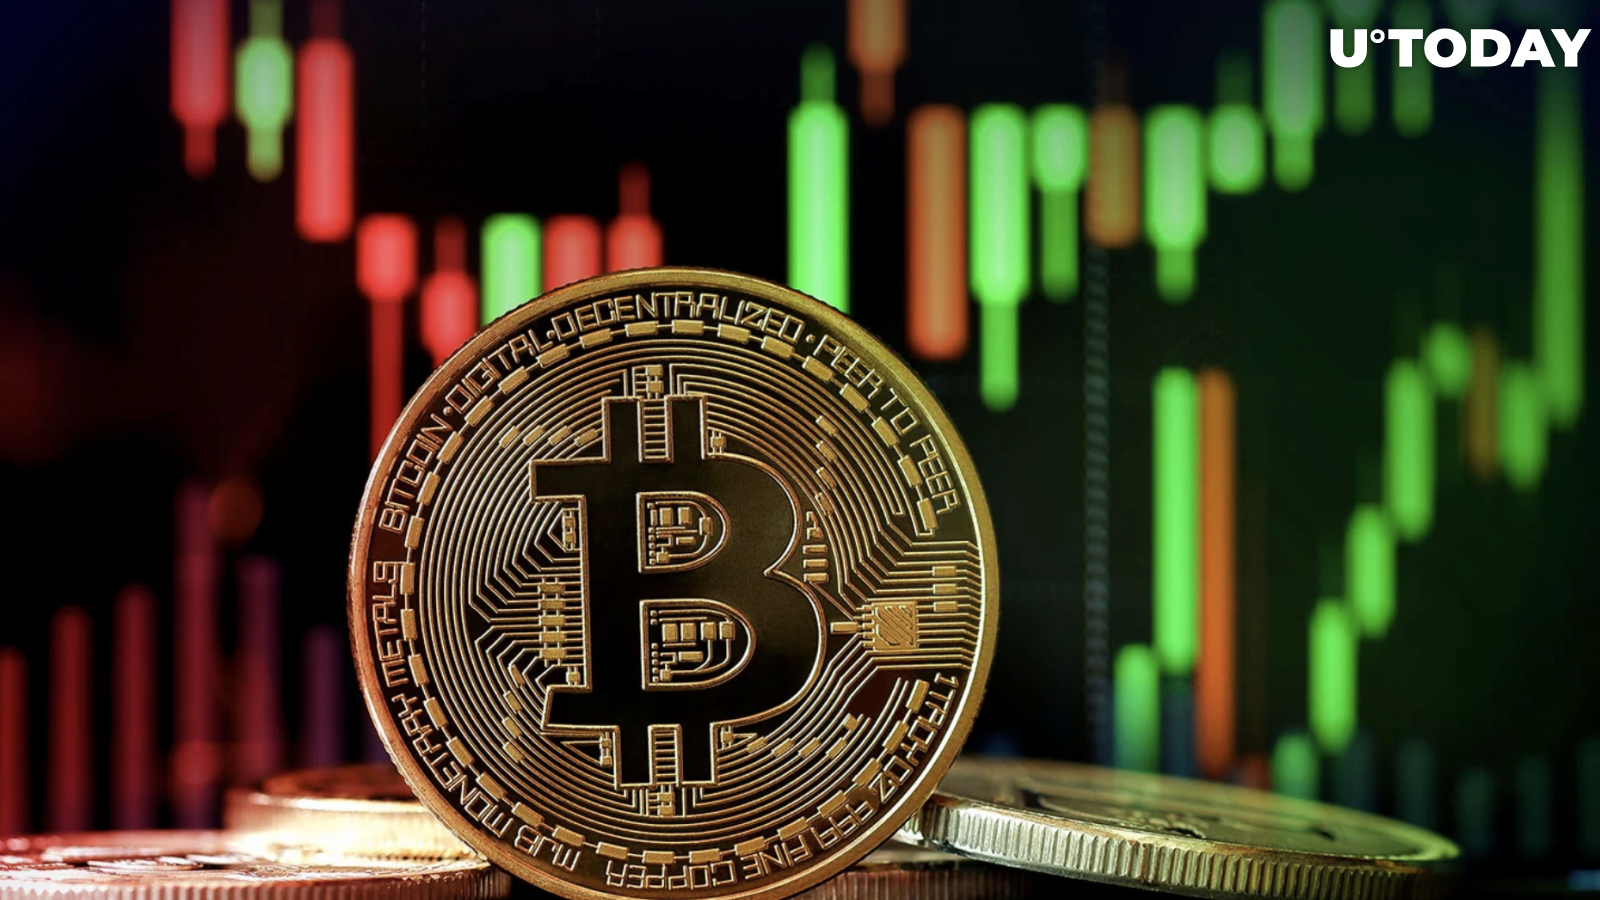 Major Bitcoin Price Drop "Improbable," Glassnode Co-Founder Says